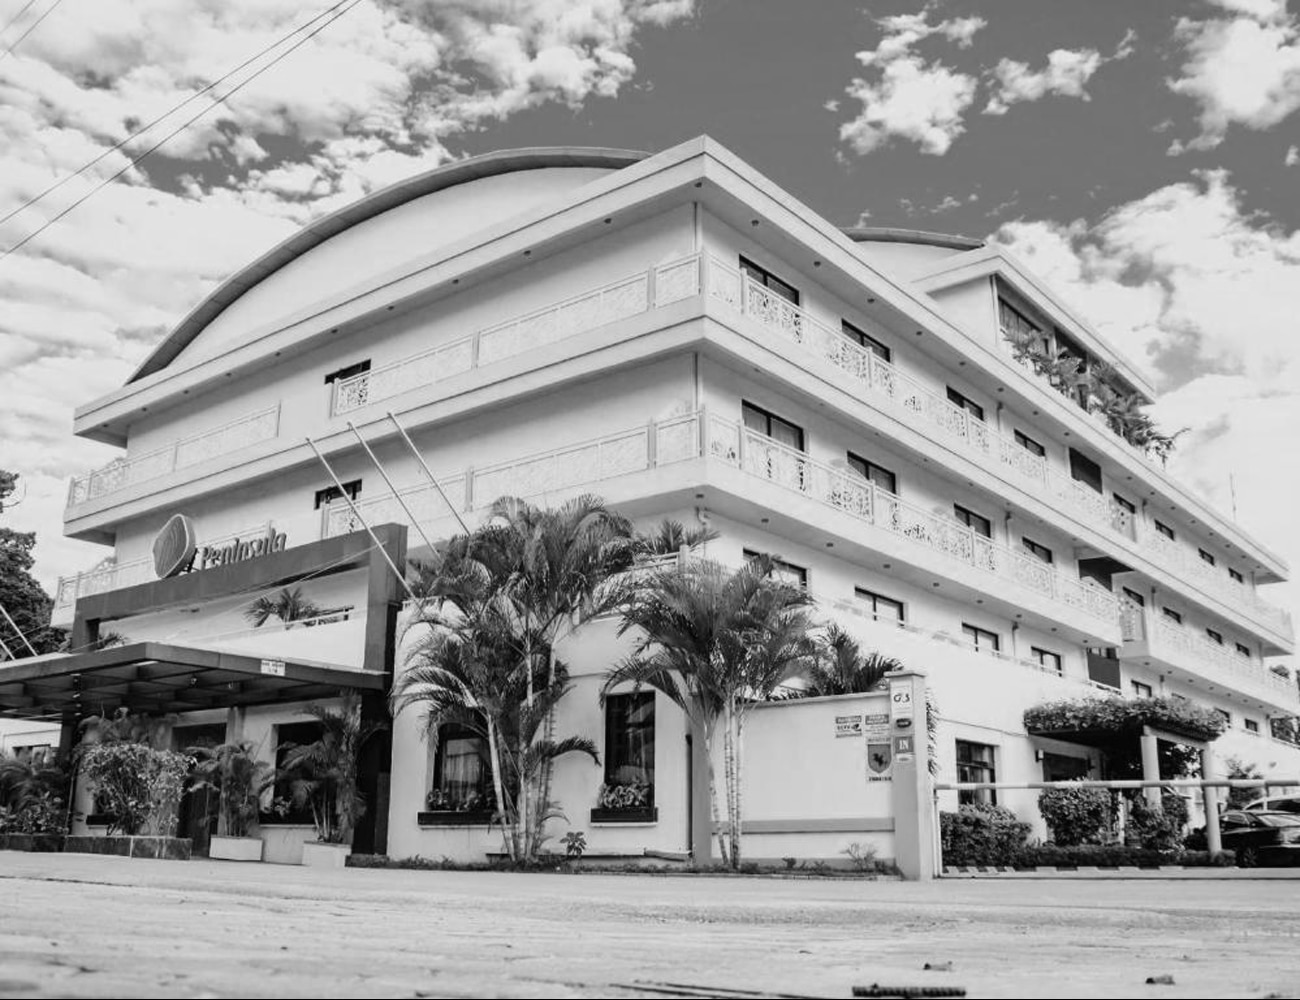 Peninsula Hotel in Dar es Salaam